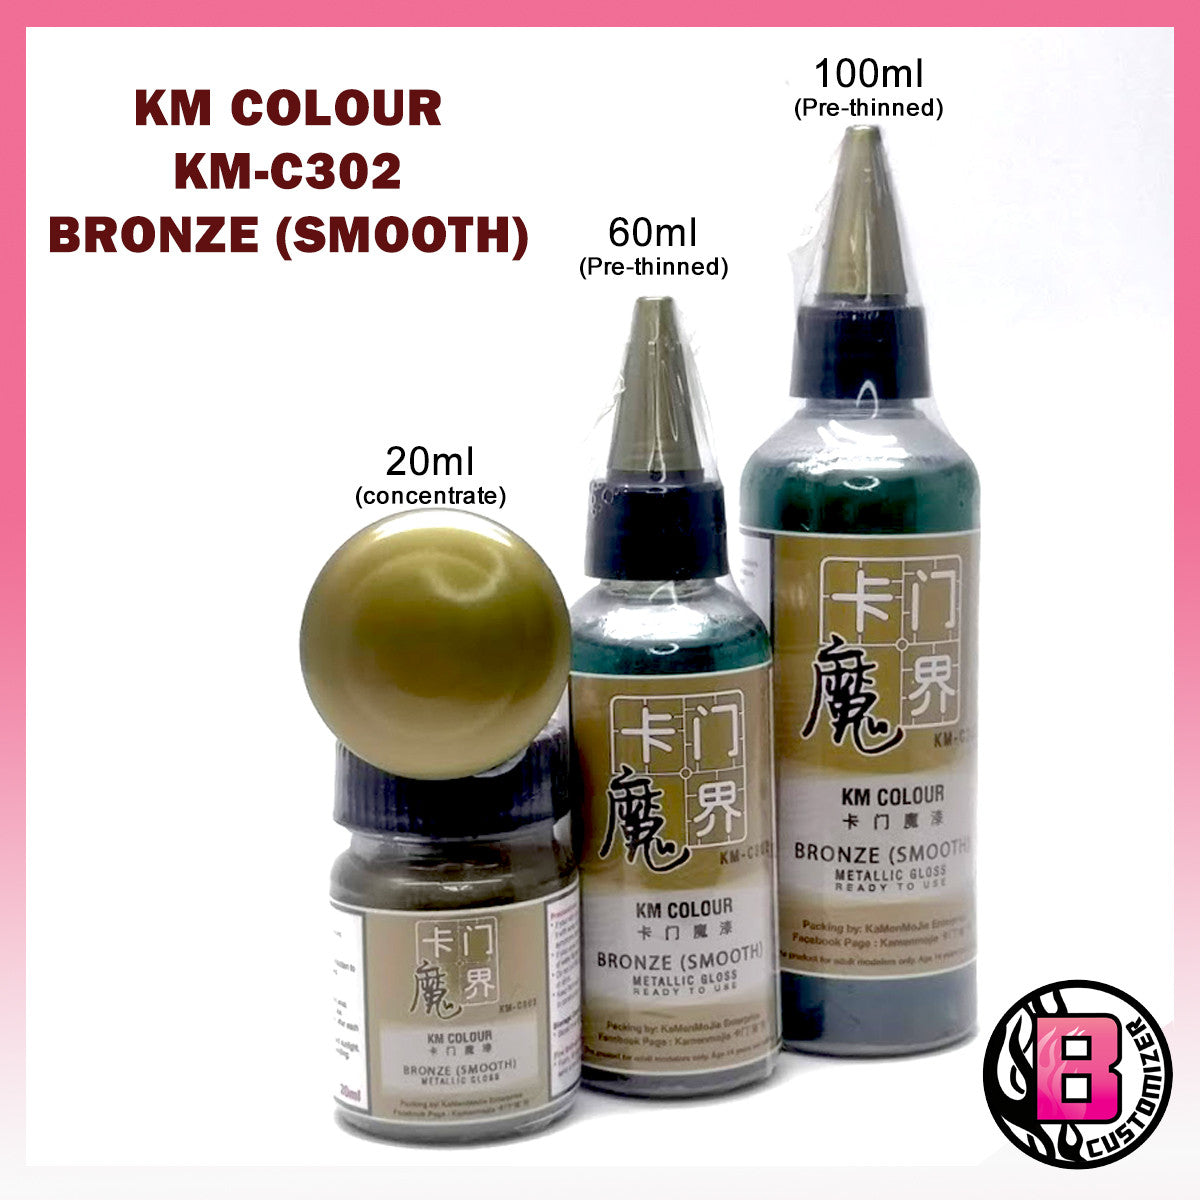 KM Colour Bronze Smooth (KM-C302)